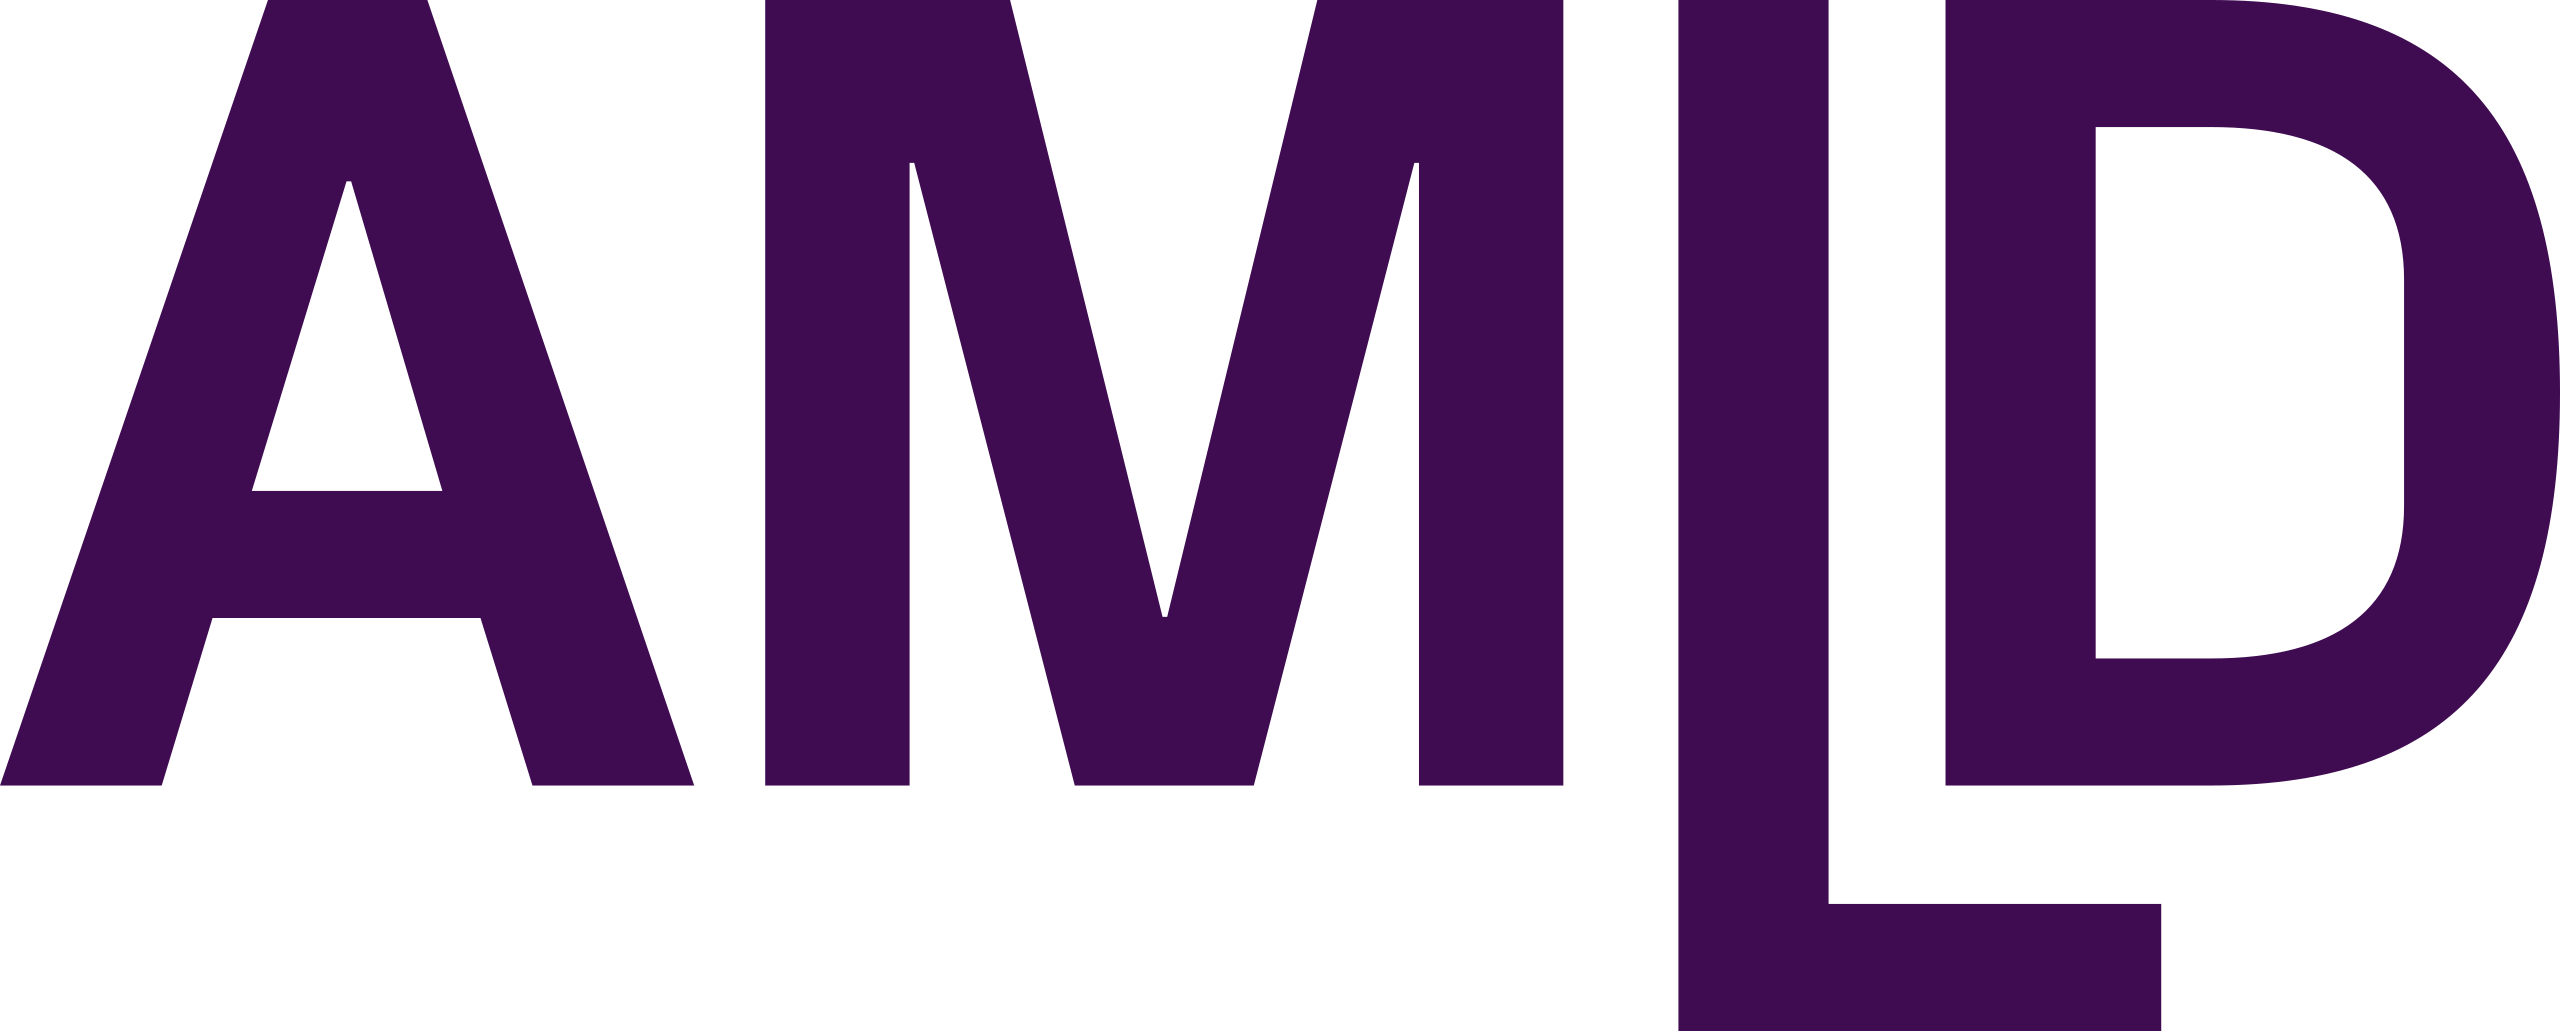 AMLD_2020_logo.svg.png